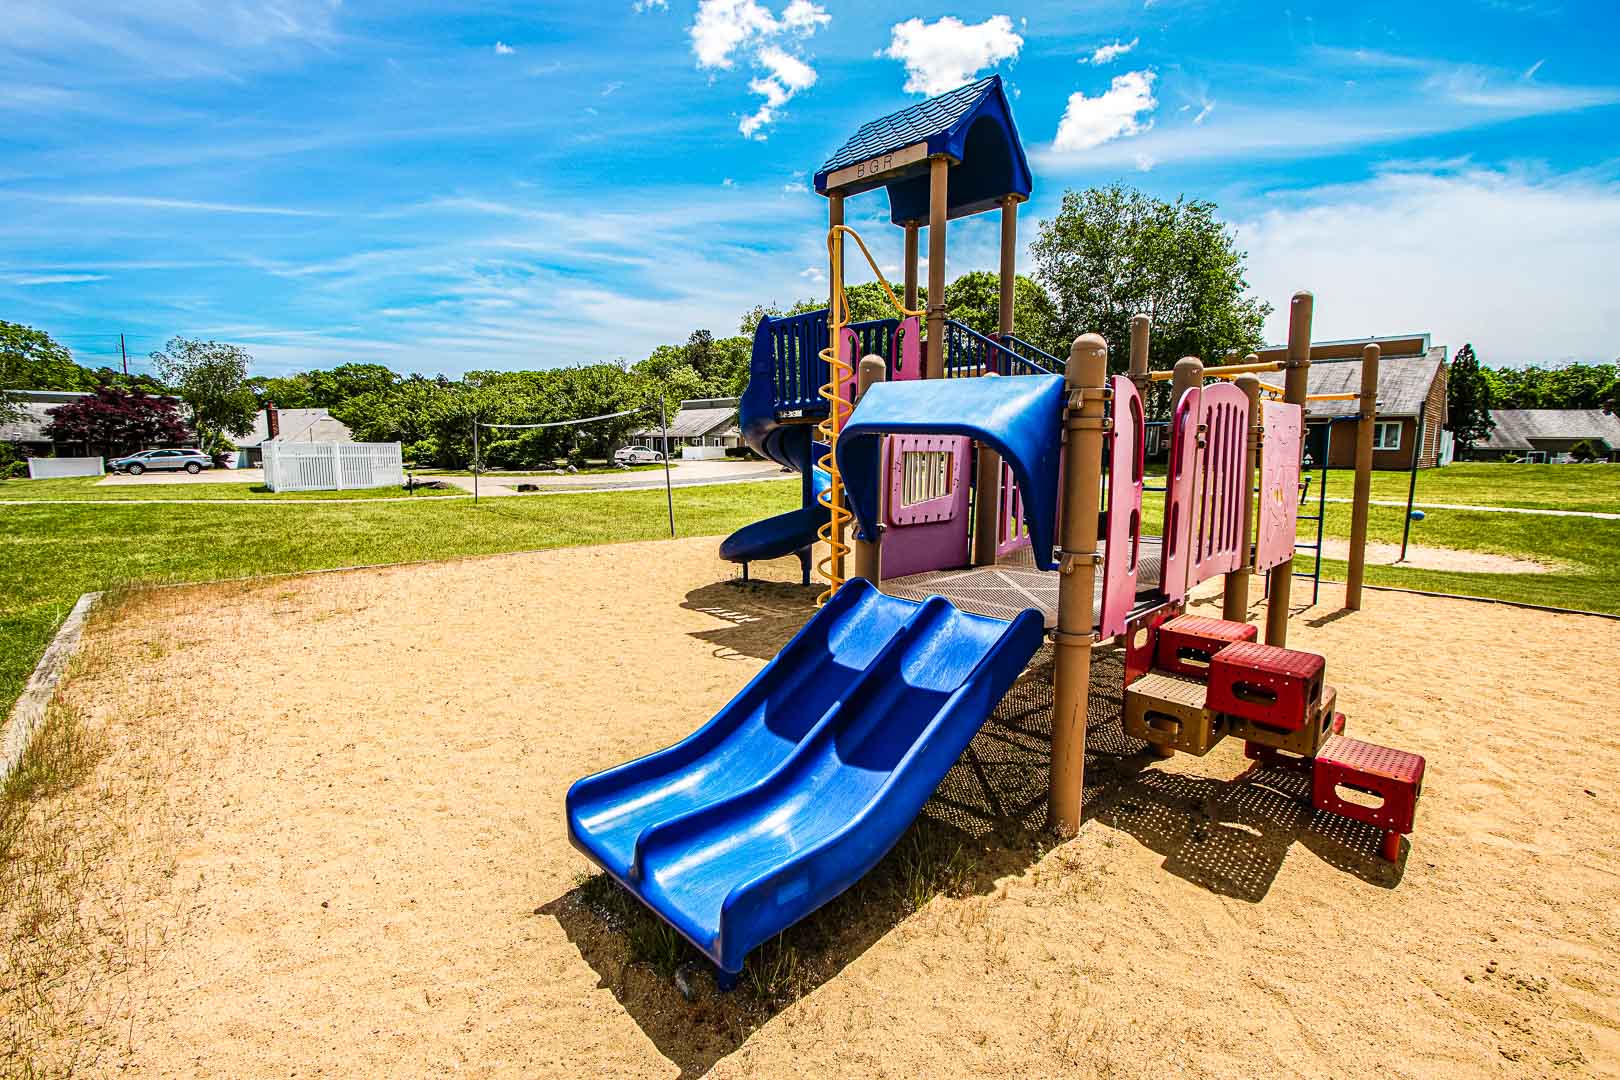 An enjoyable outdoor kids playground at VRI's Brewster Green Resort in Massachusetts.